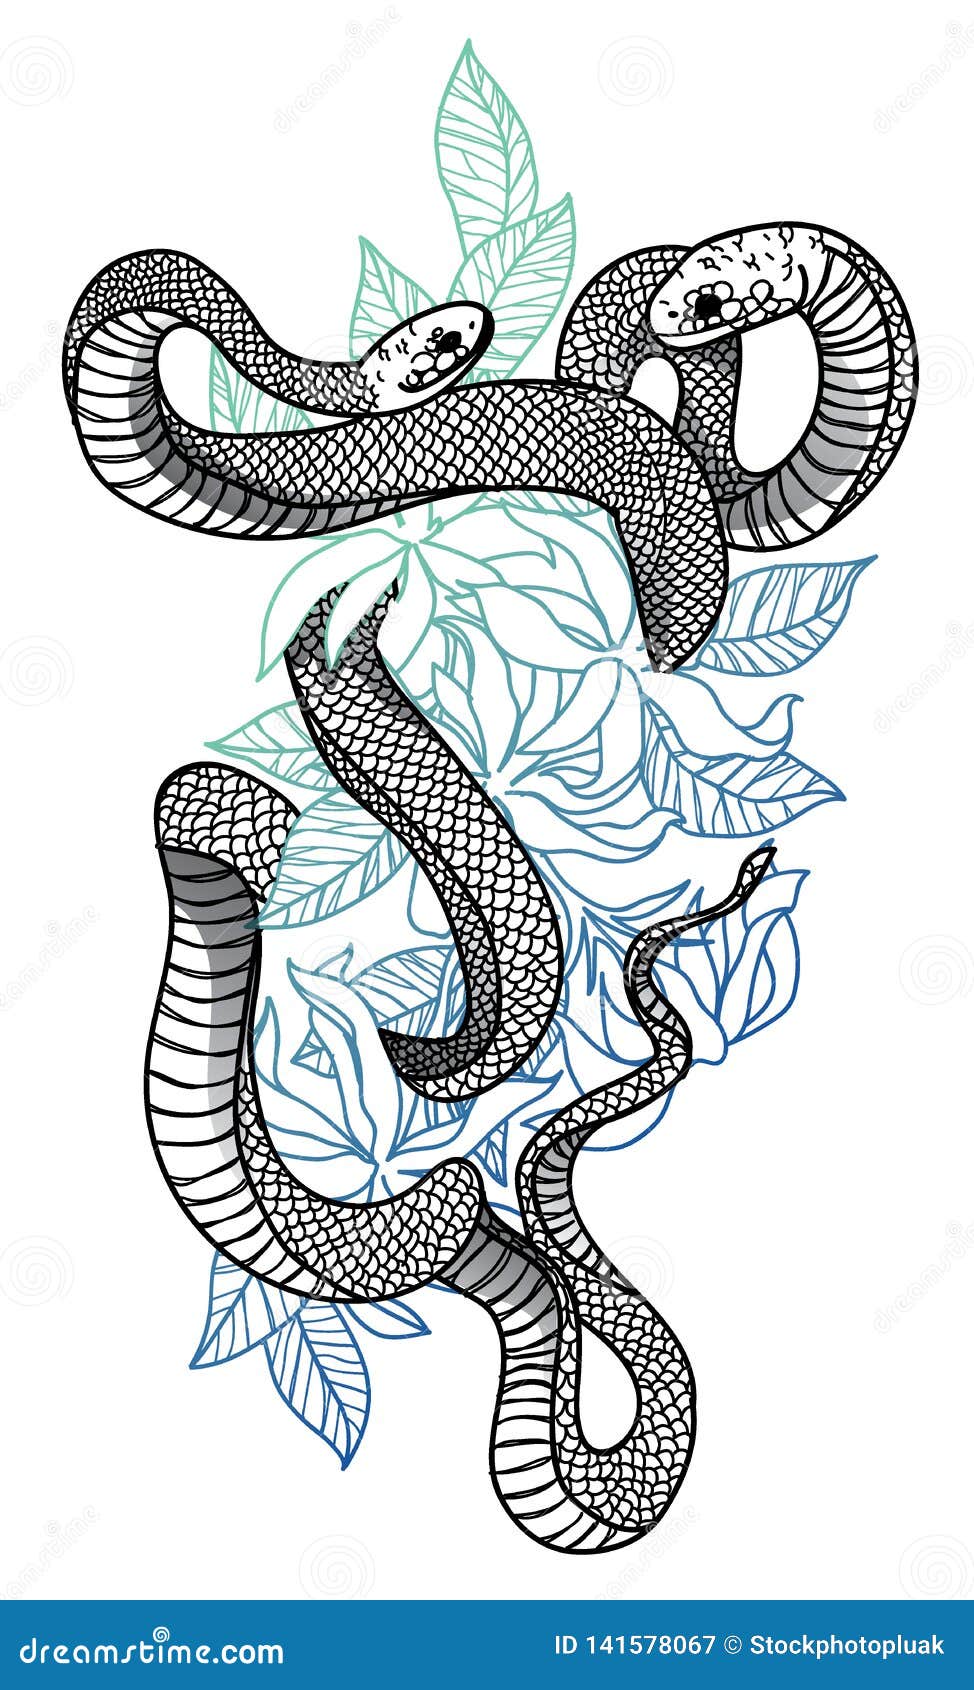 Loreen 2L Tattoo - Snake sketch 🐍 #toulouse #tatouage #tattoo #tattooart  #tattooartist #ink #inked #inkart #sketch #sketchtattoo #sketchtattoos  #blacktattoo #blackwork #blcktattoo #snakes #snaketattoo | Facebook